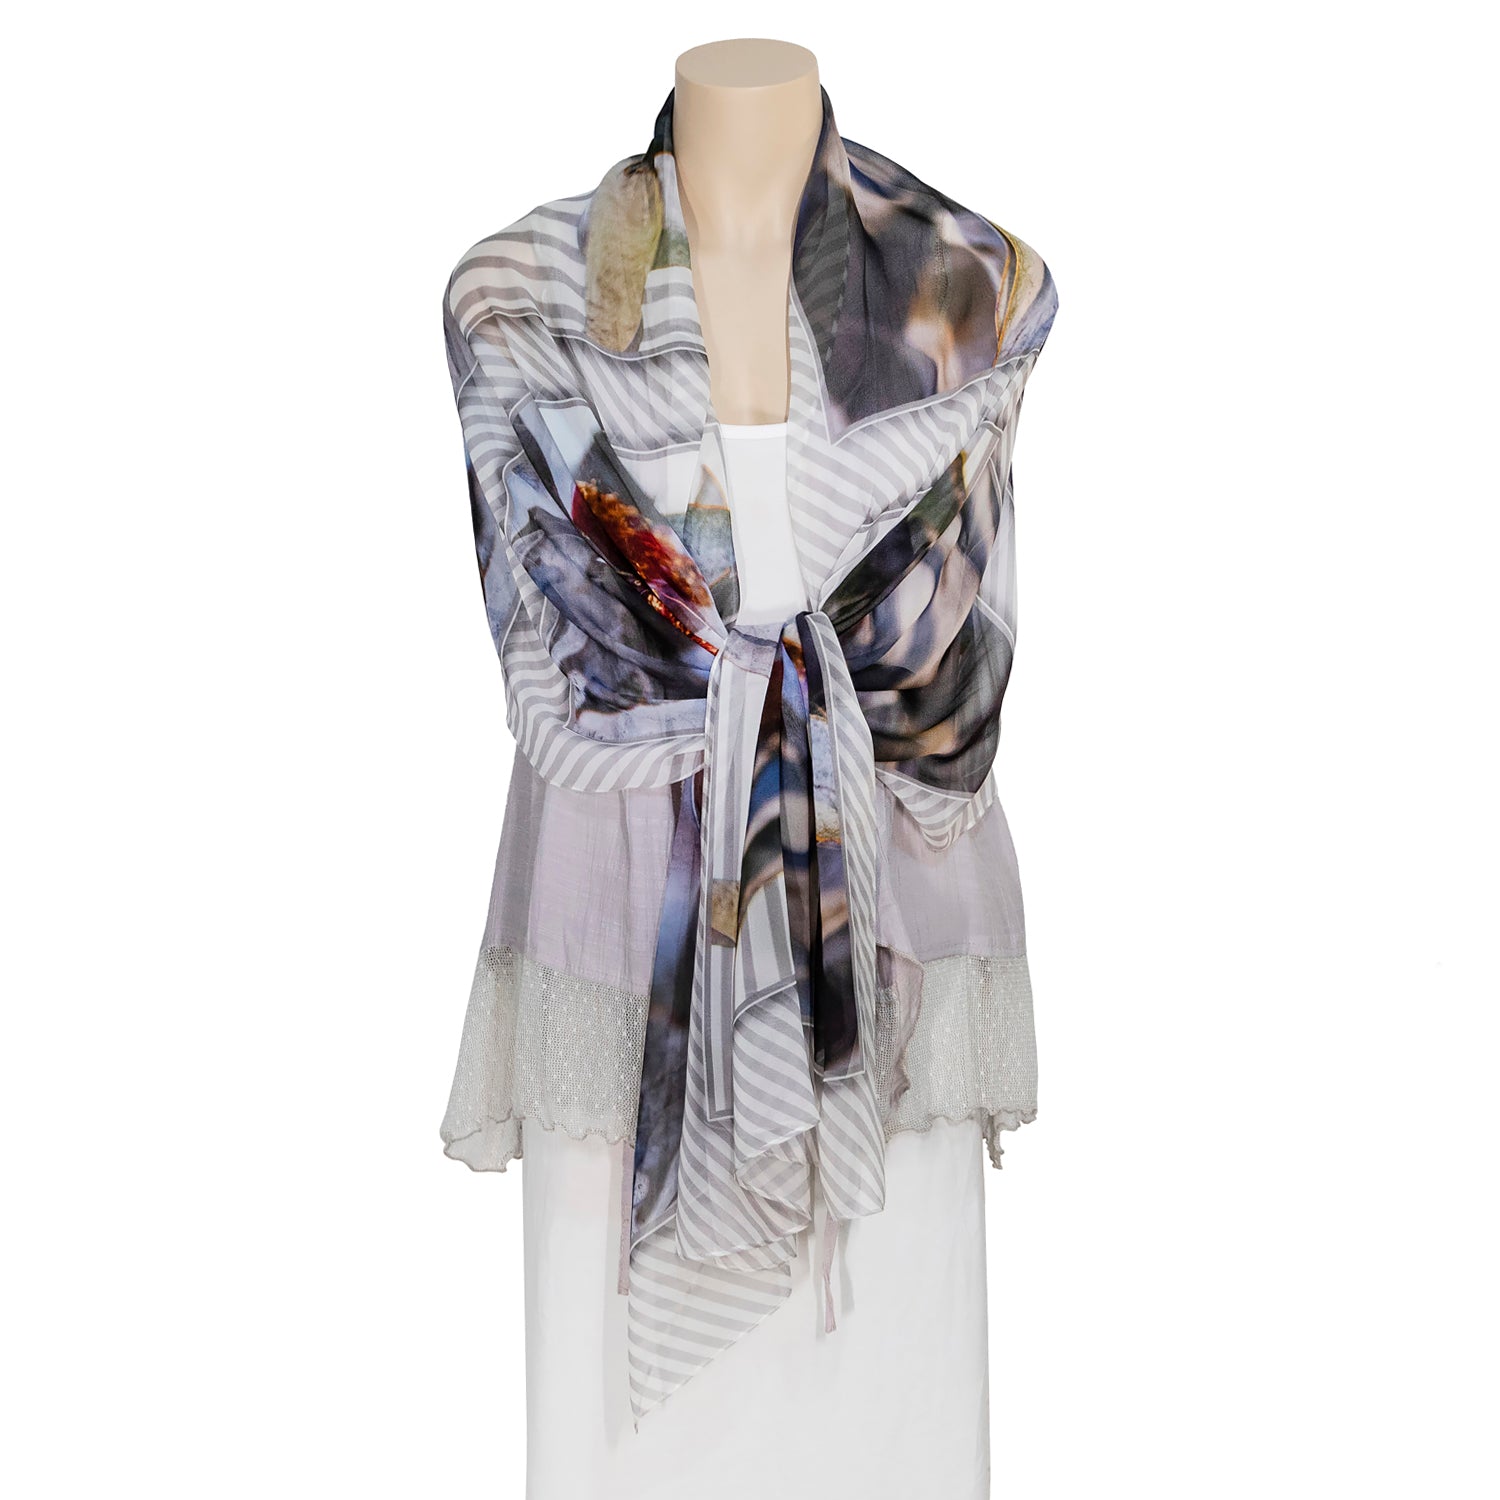 macrocarpa silk scarf worn as shawl over grey vest and white dress